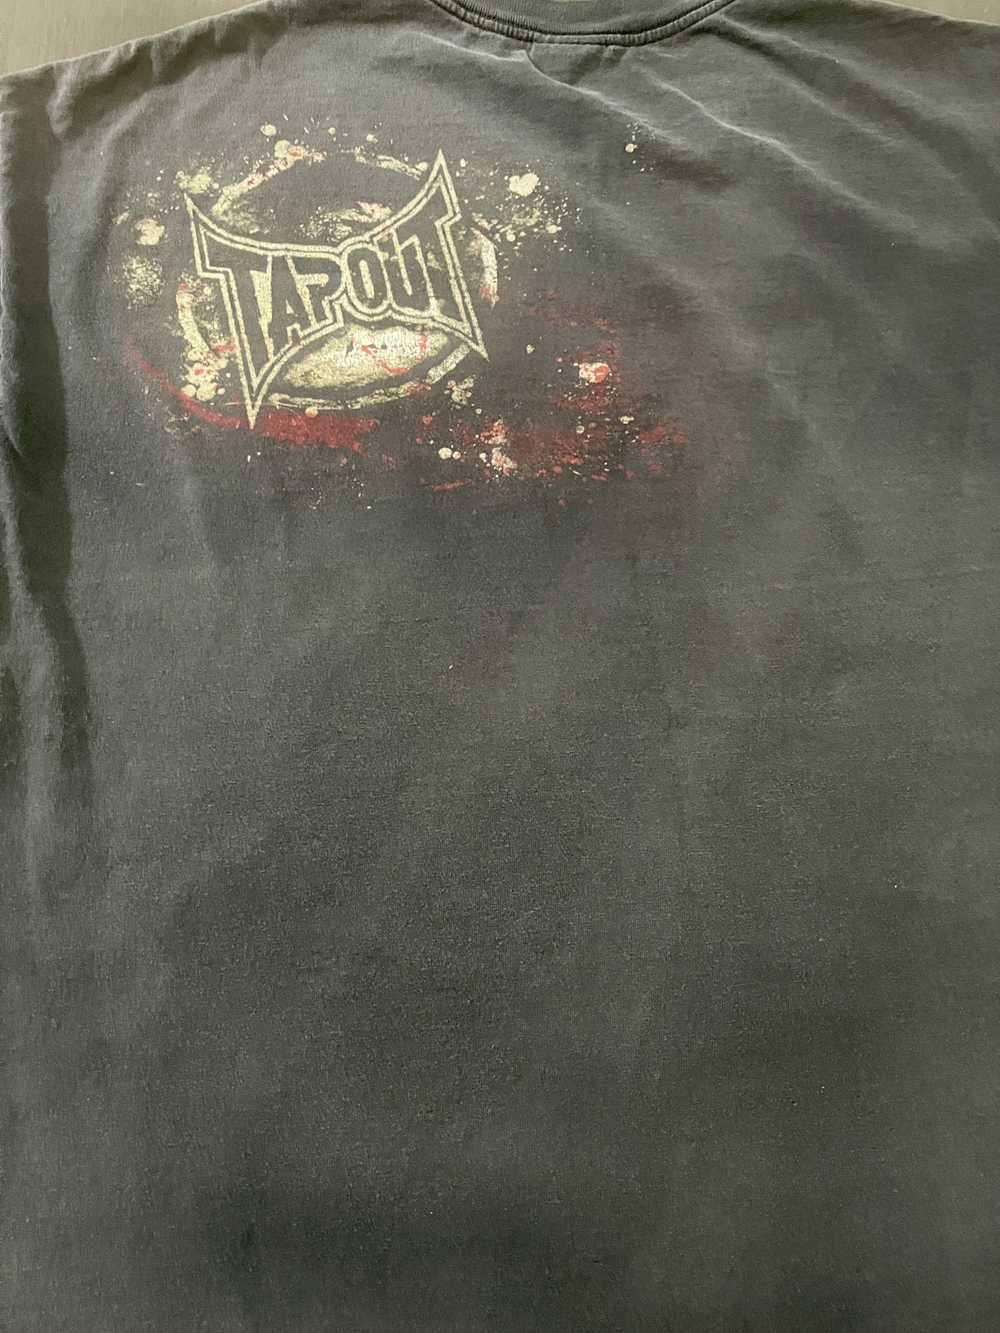 Tapout Tapout blood splatter skull T-Shirt - image 2